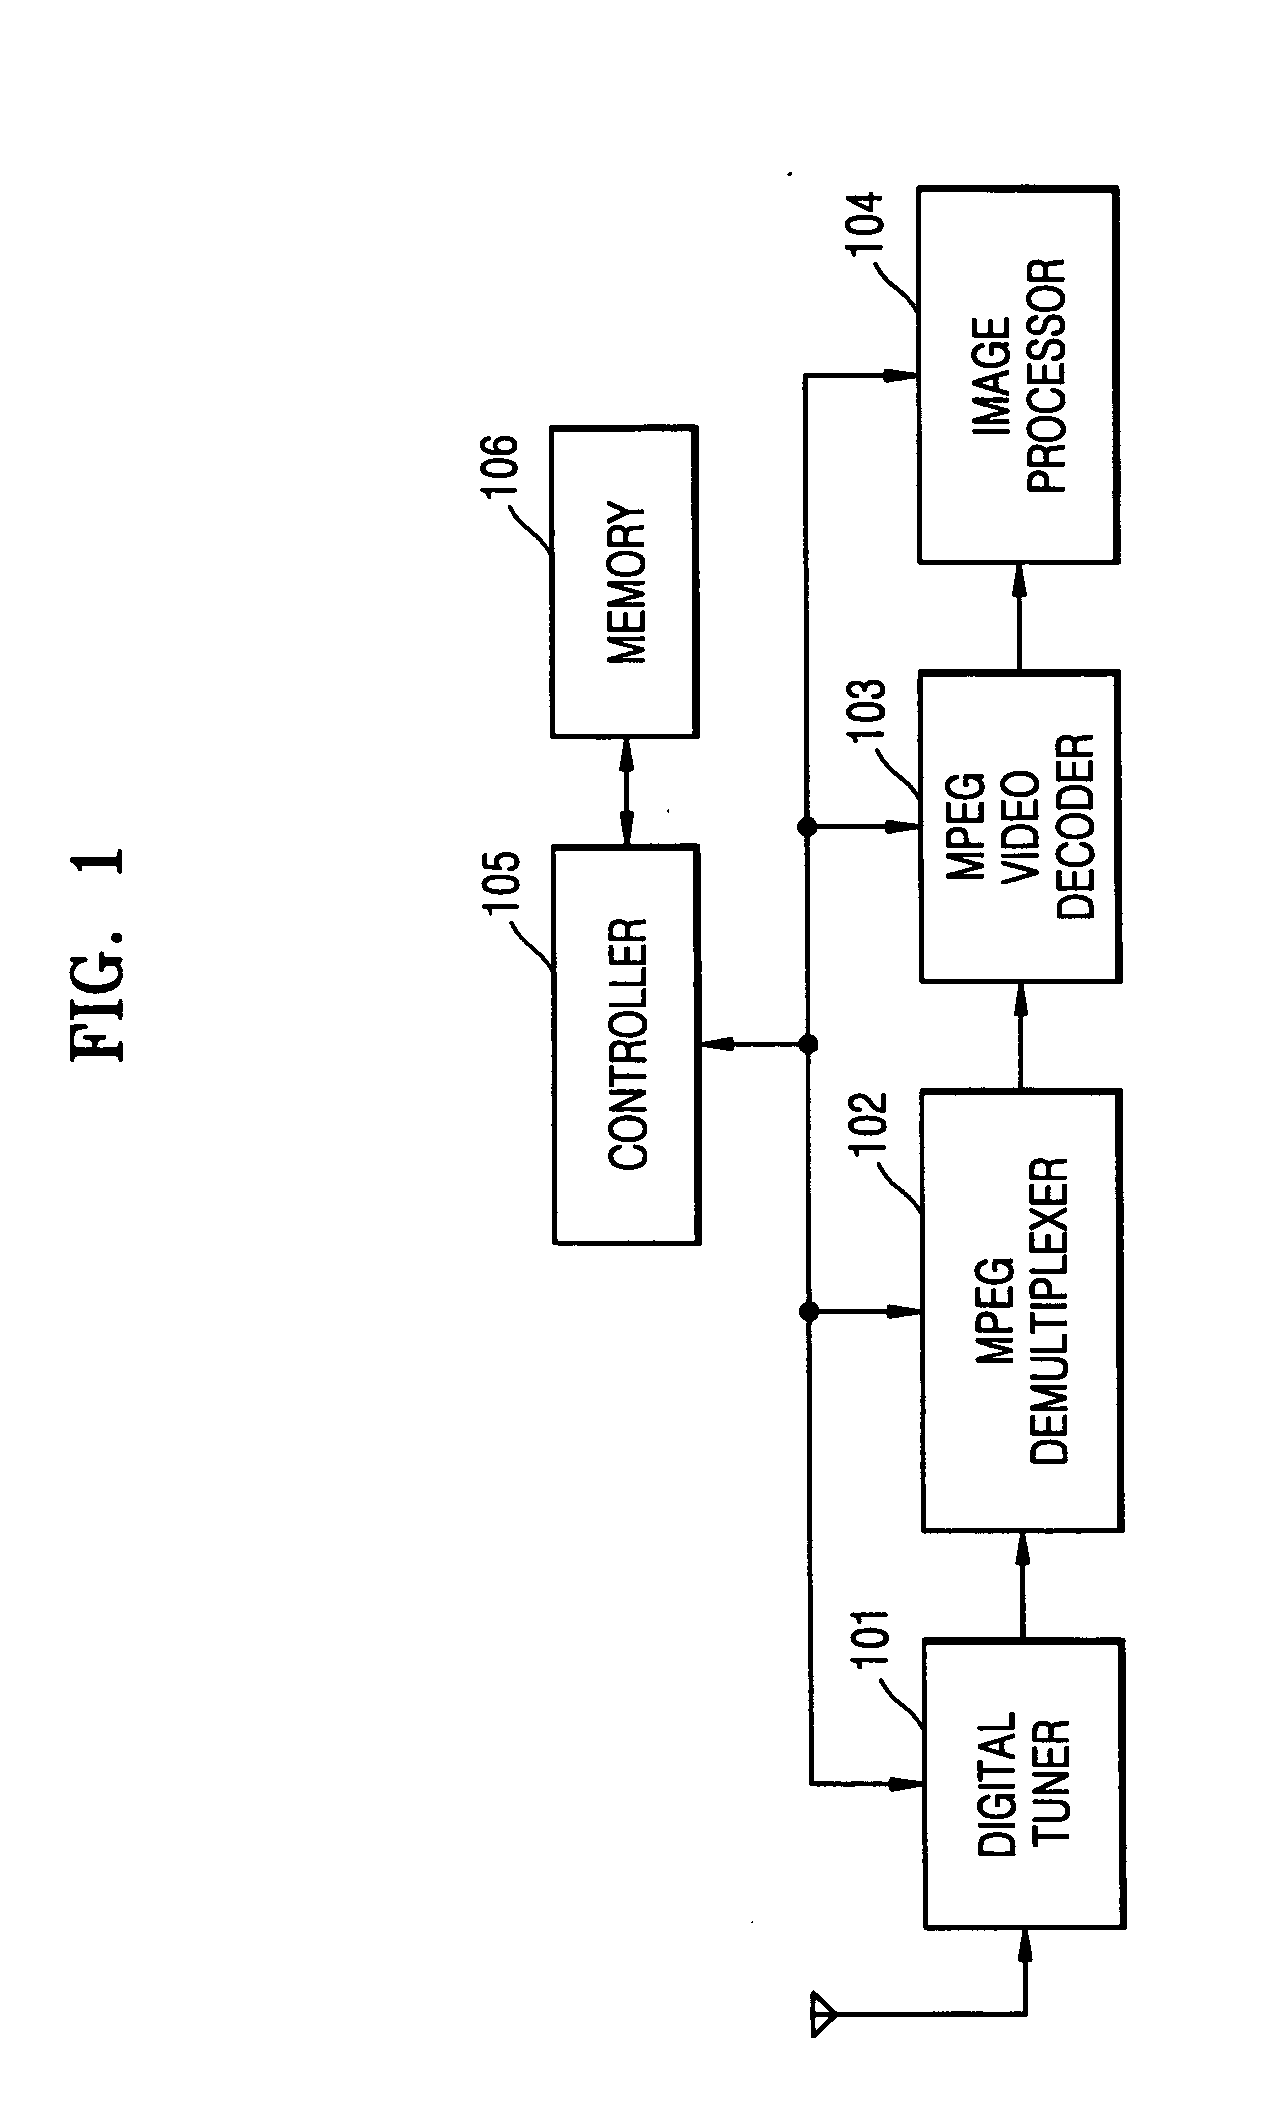 Method of scanning channel of digital television